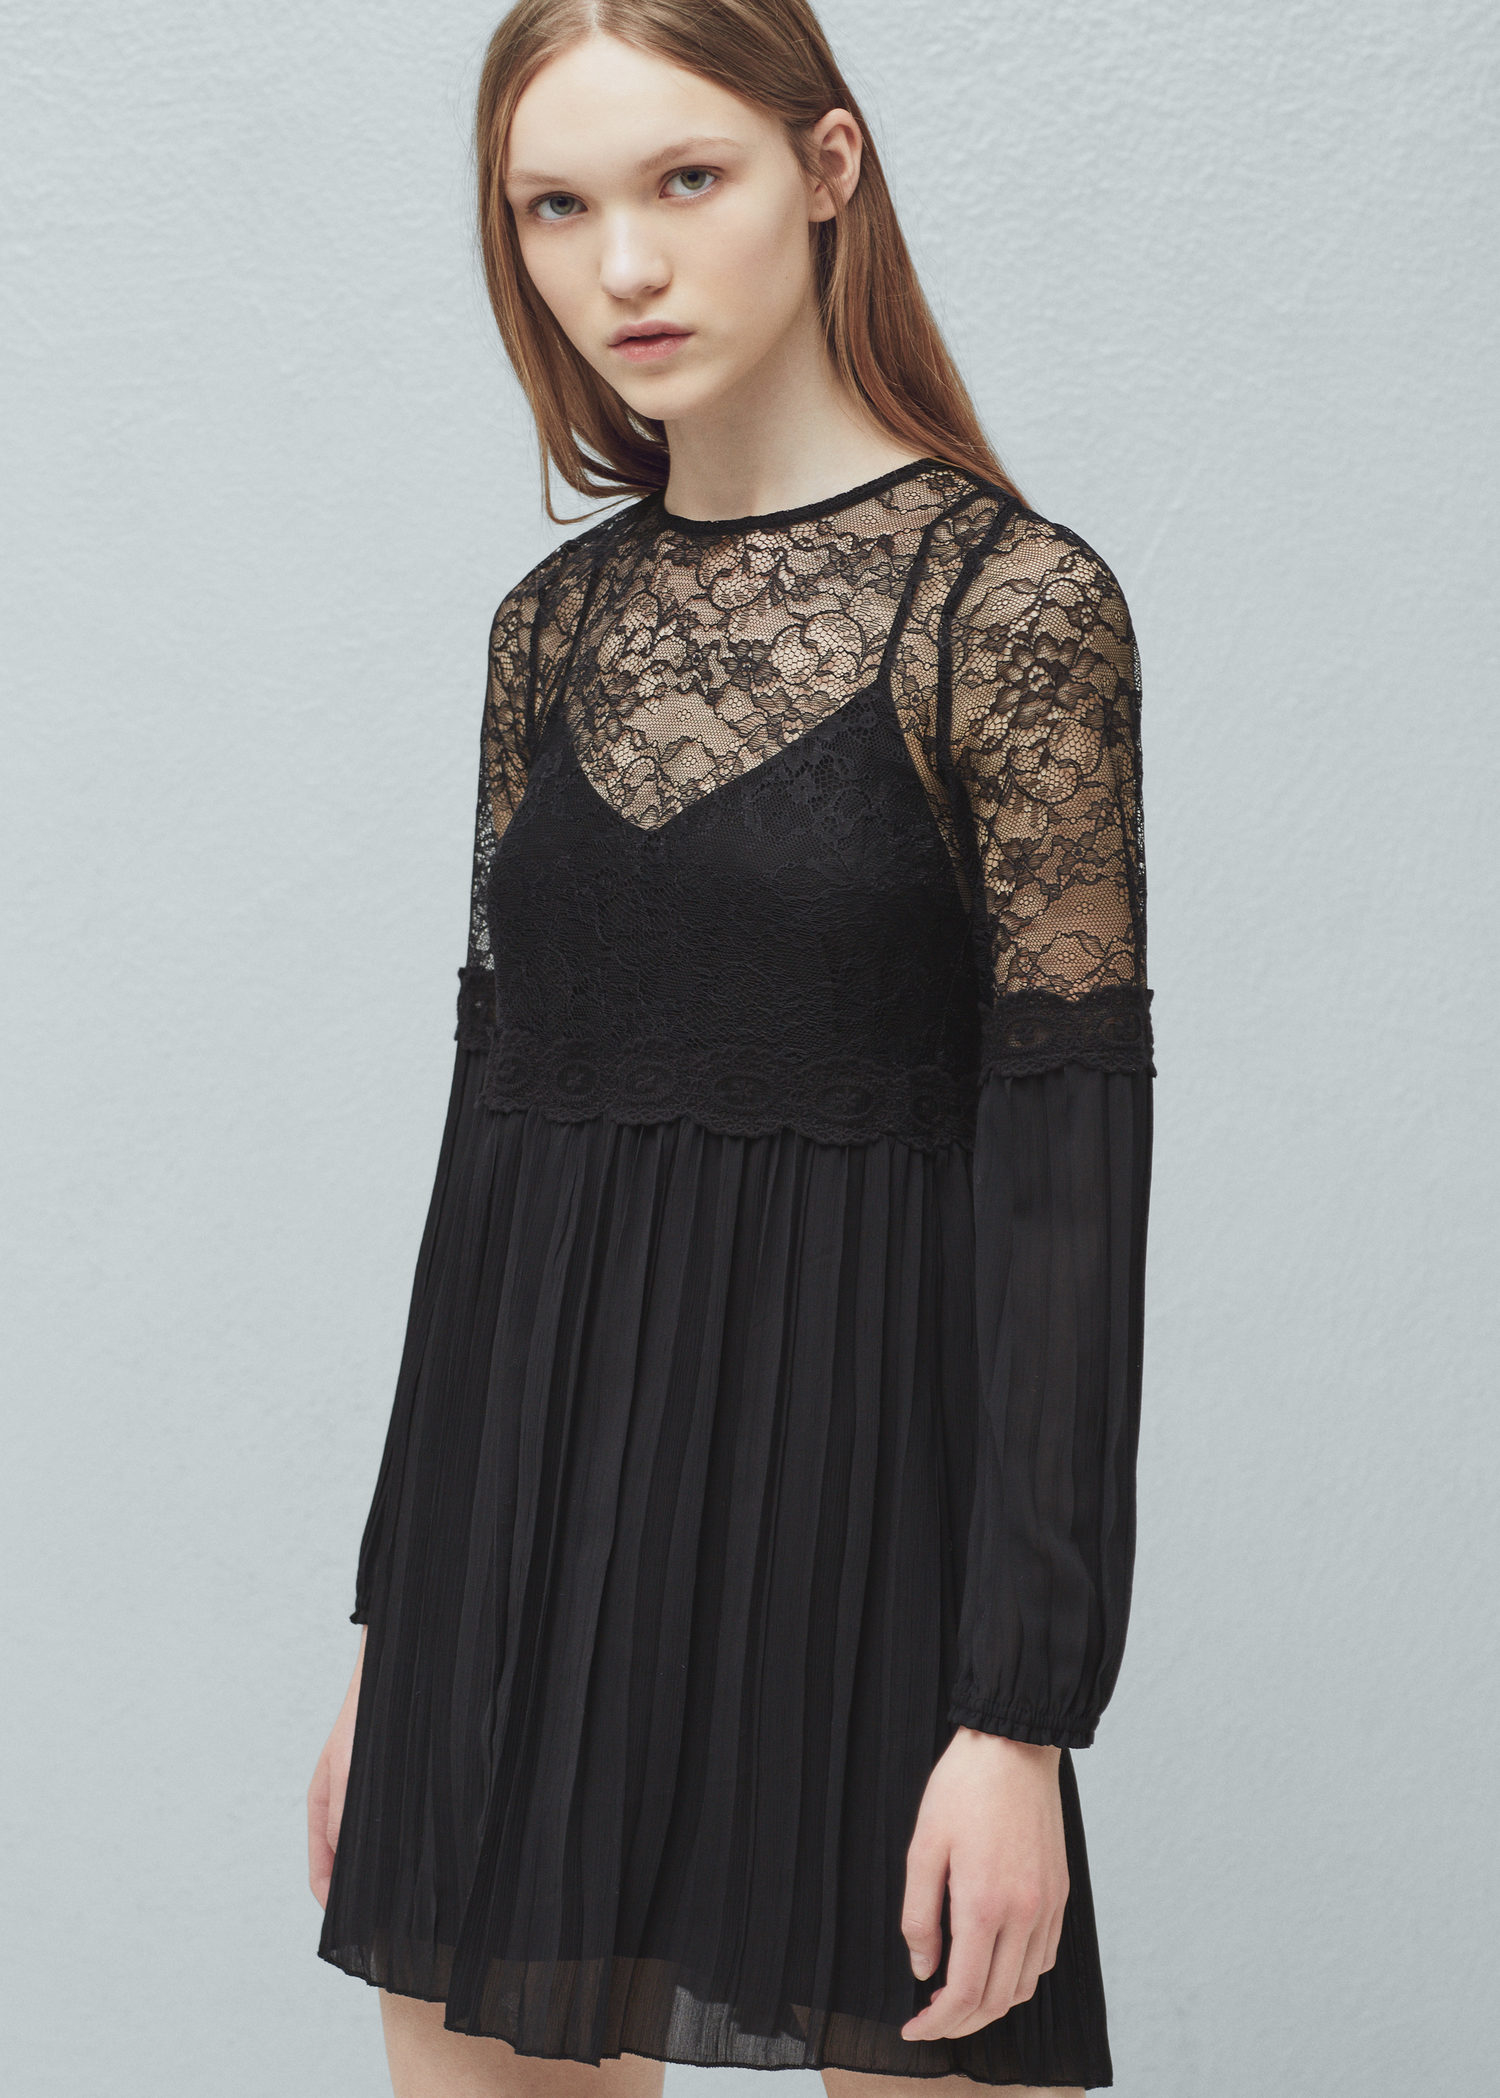 Lyst - Mango Lace Panel Dress in Black